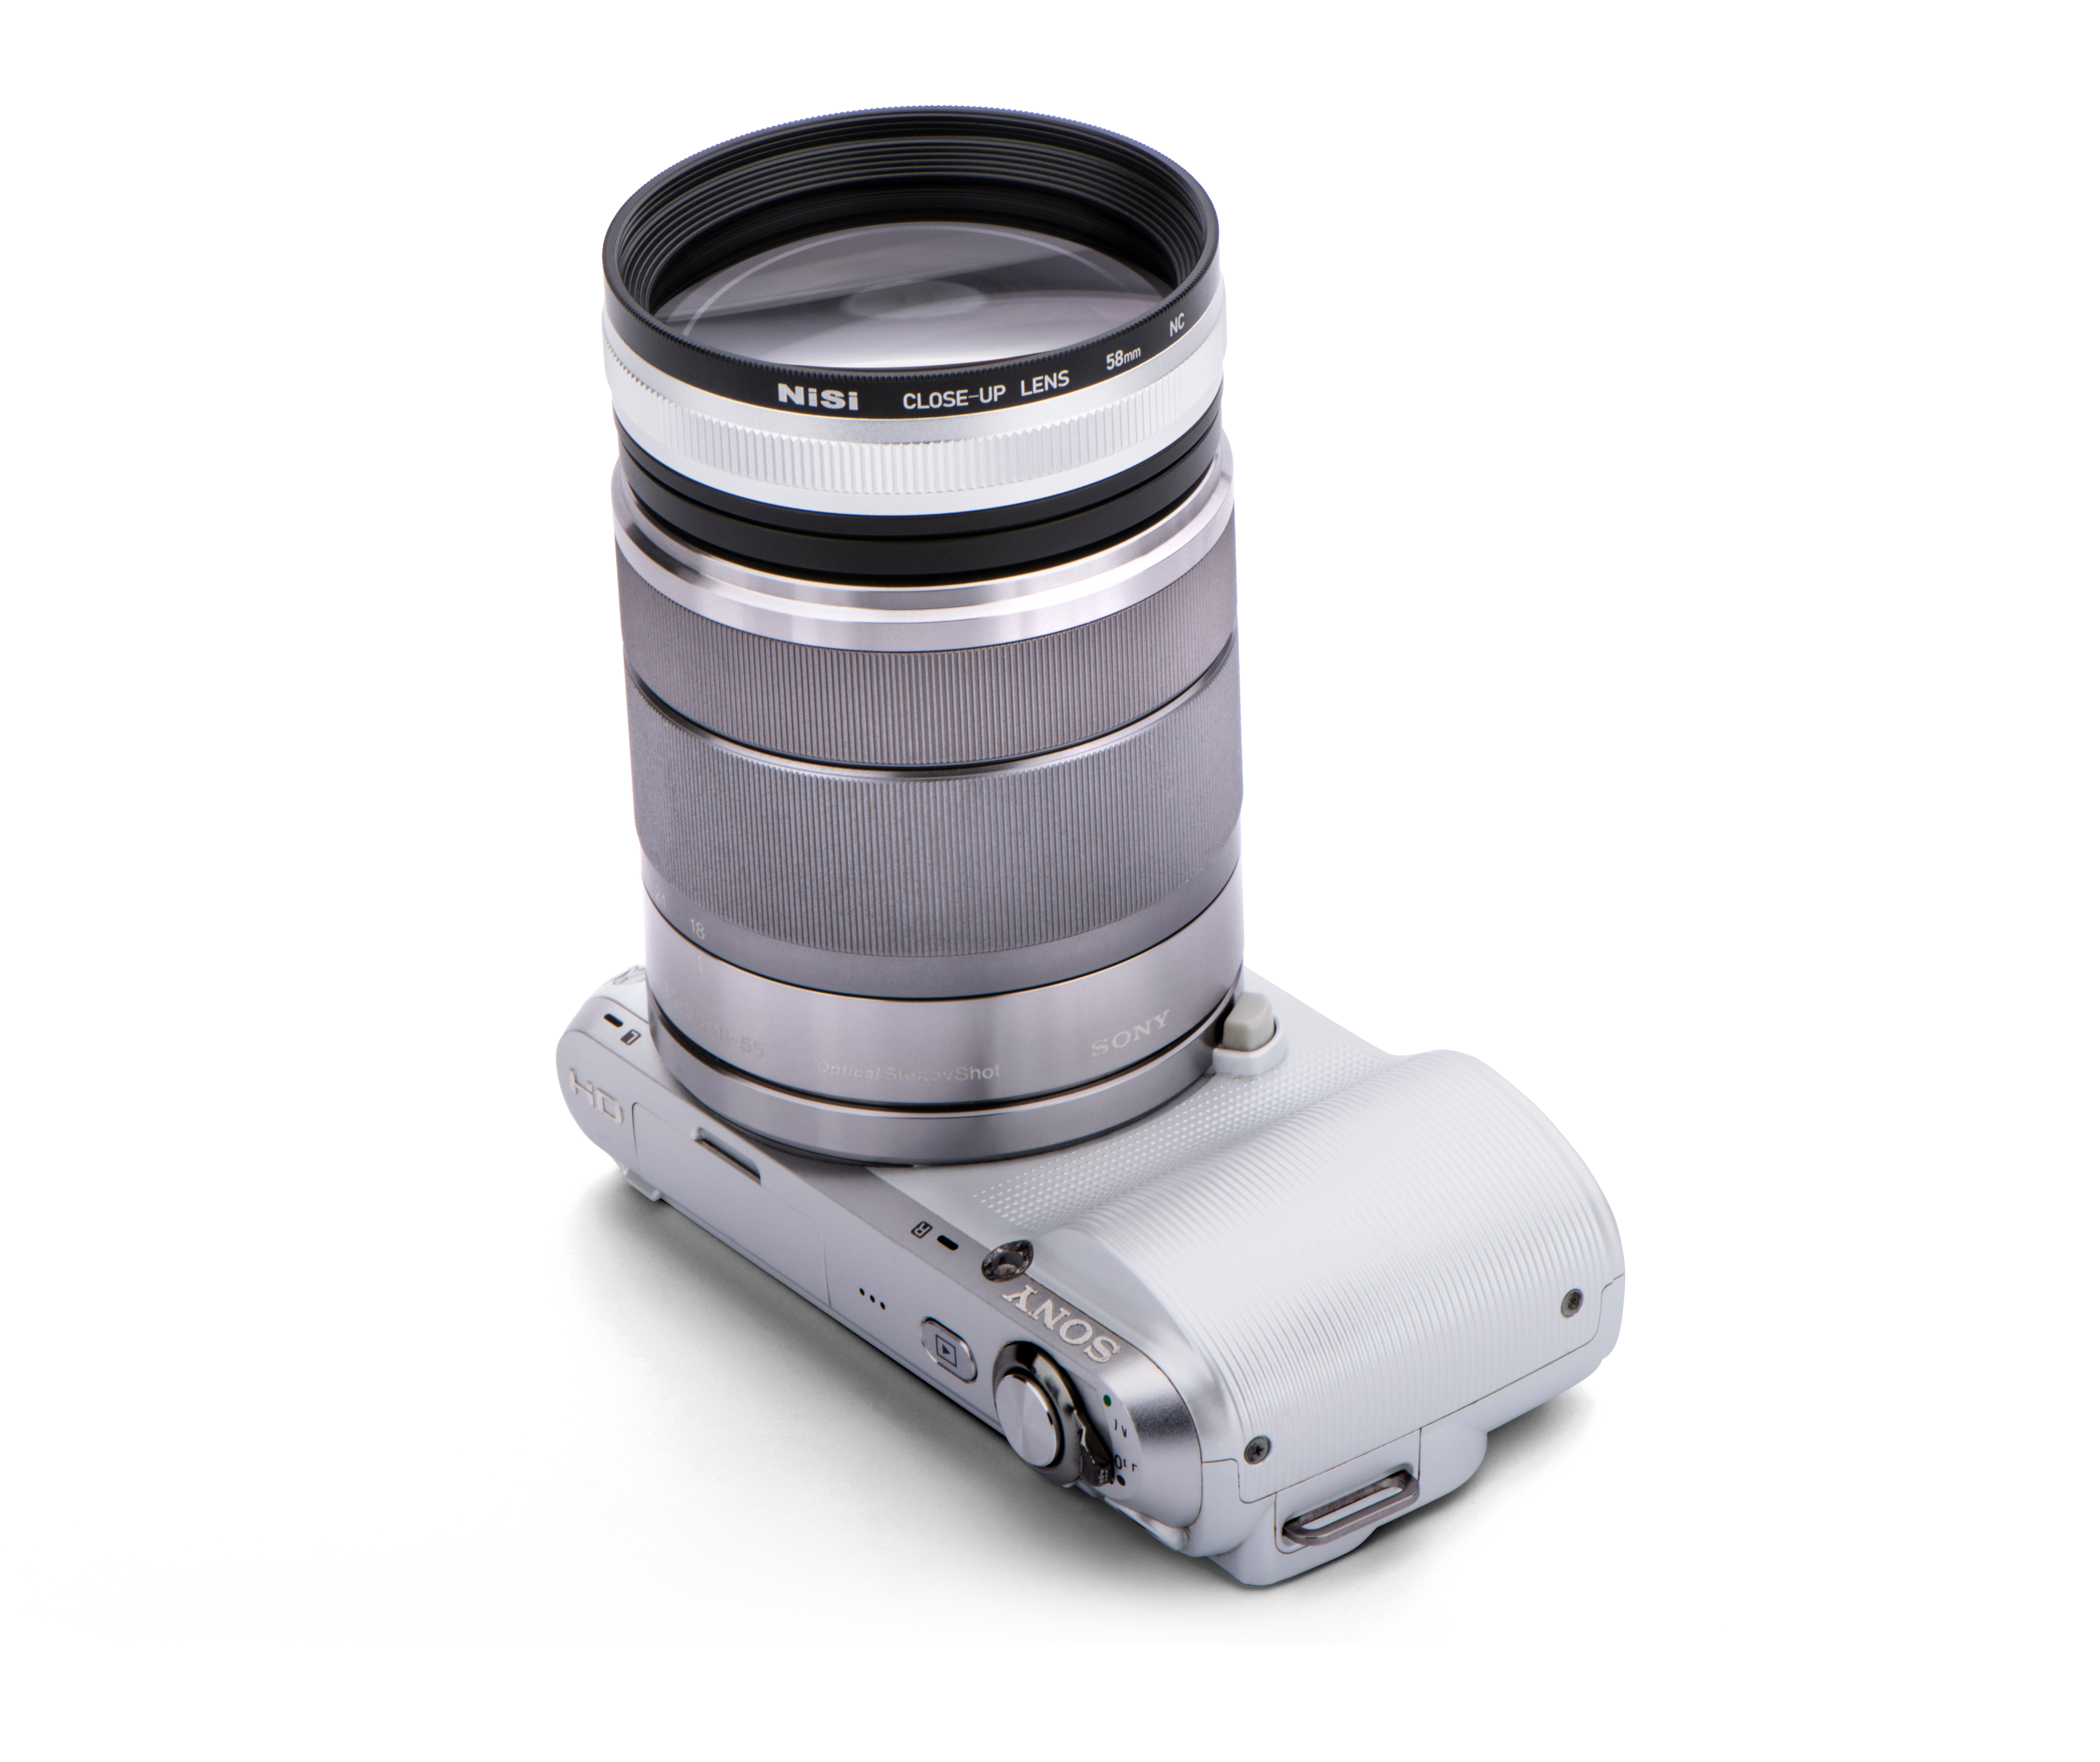 NiSi Nahlinse 58mm auf Objektiv und Kamera